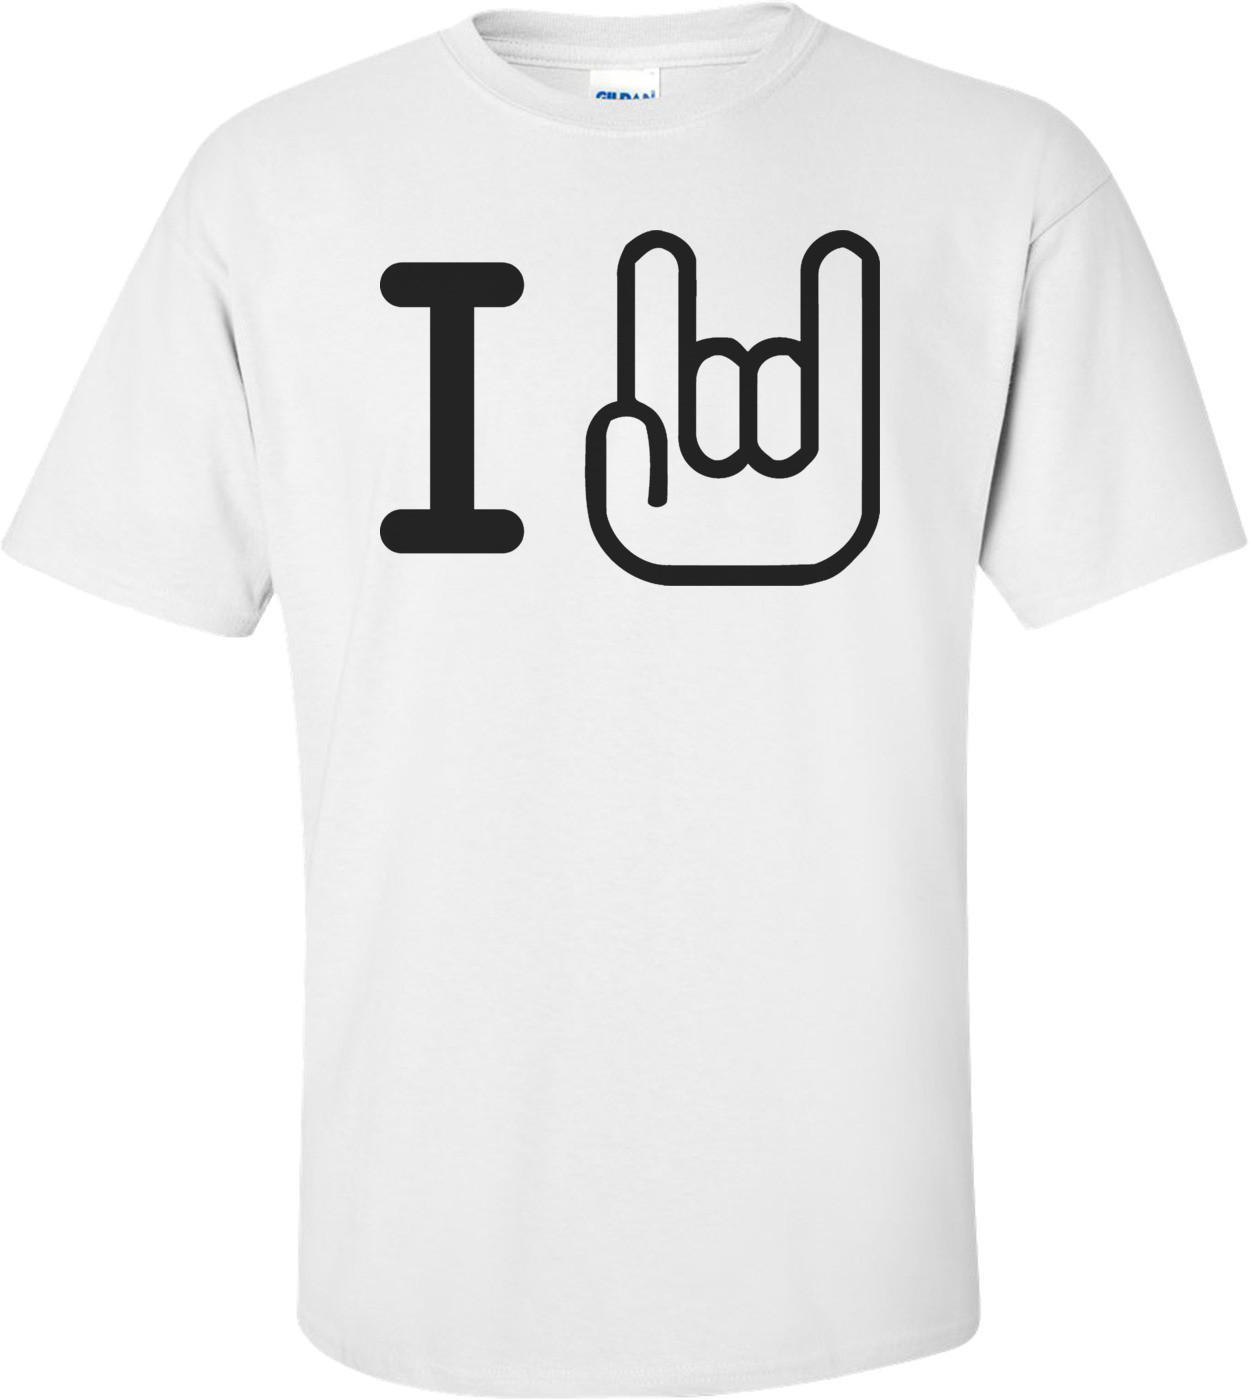 I Rock Horns Sign T-shirt